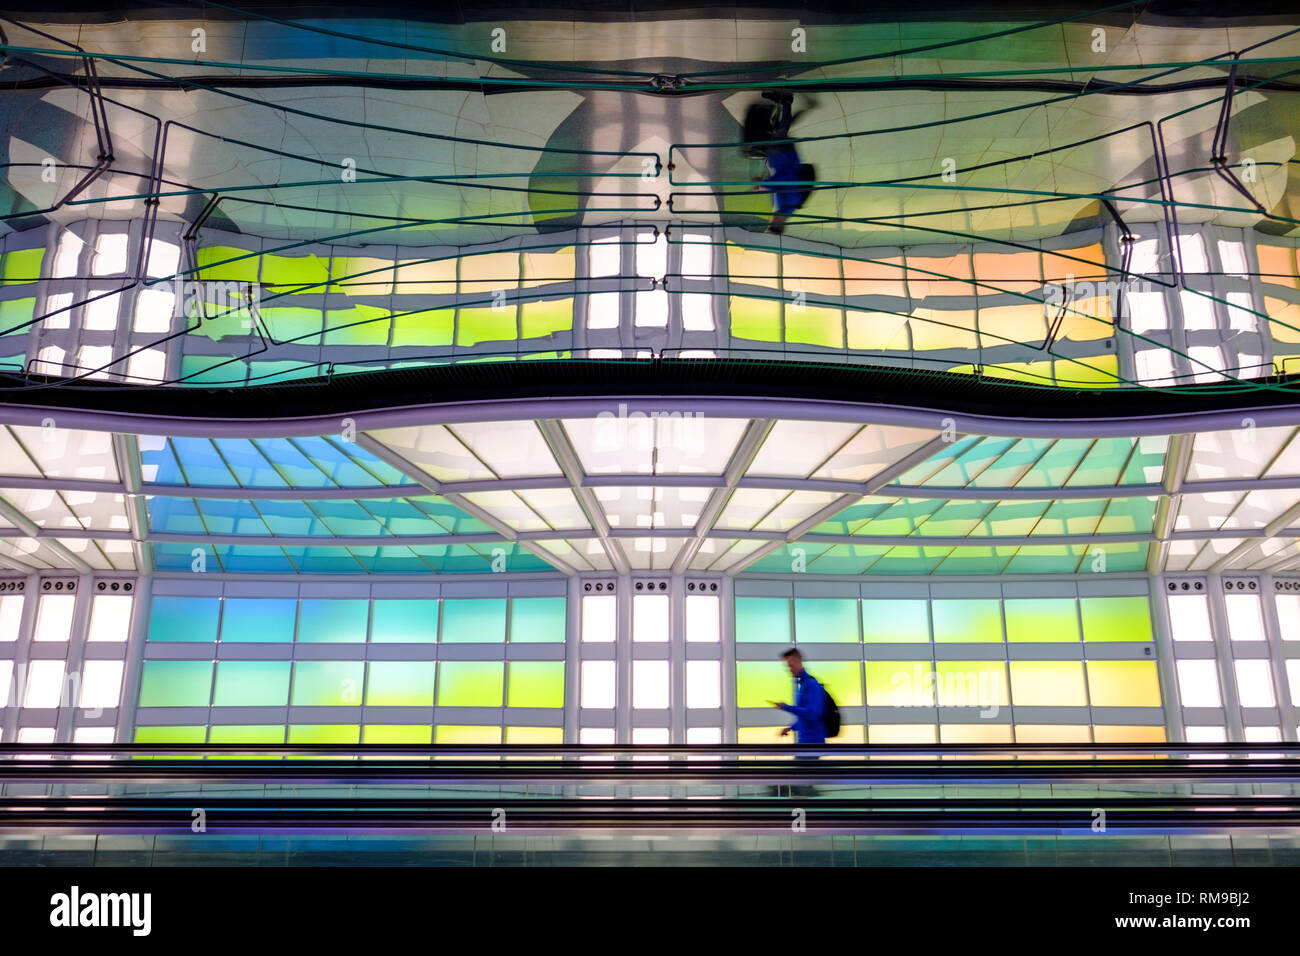 Air passenger, a person walking, neon lights art installation, Michael Hayden, pedestrian tunnel, Chicago O'Hare International Airport Terminal, USA Stock Photo